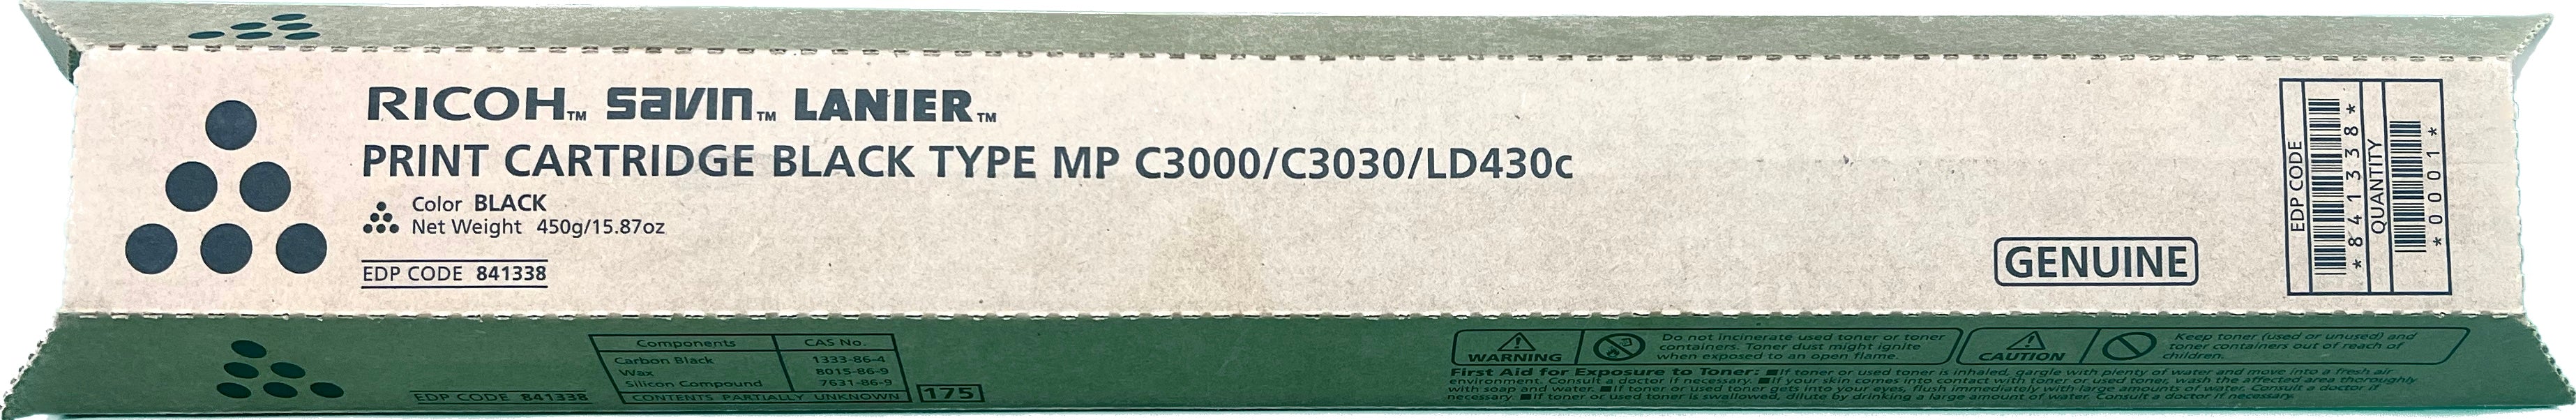 Genuine Ricoh Black Toner Cartridge | 841338 | MP C3000/C3030/LD430C